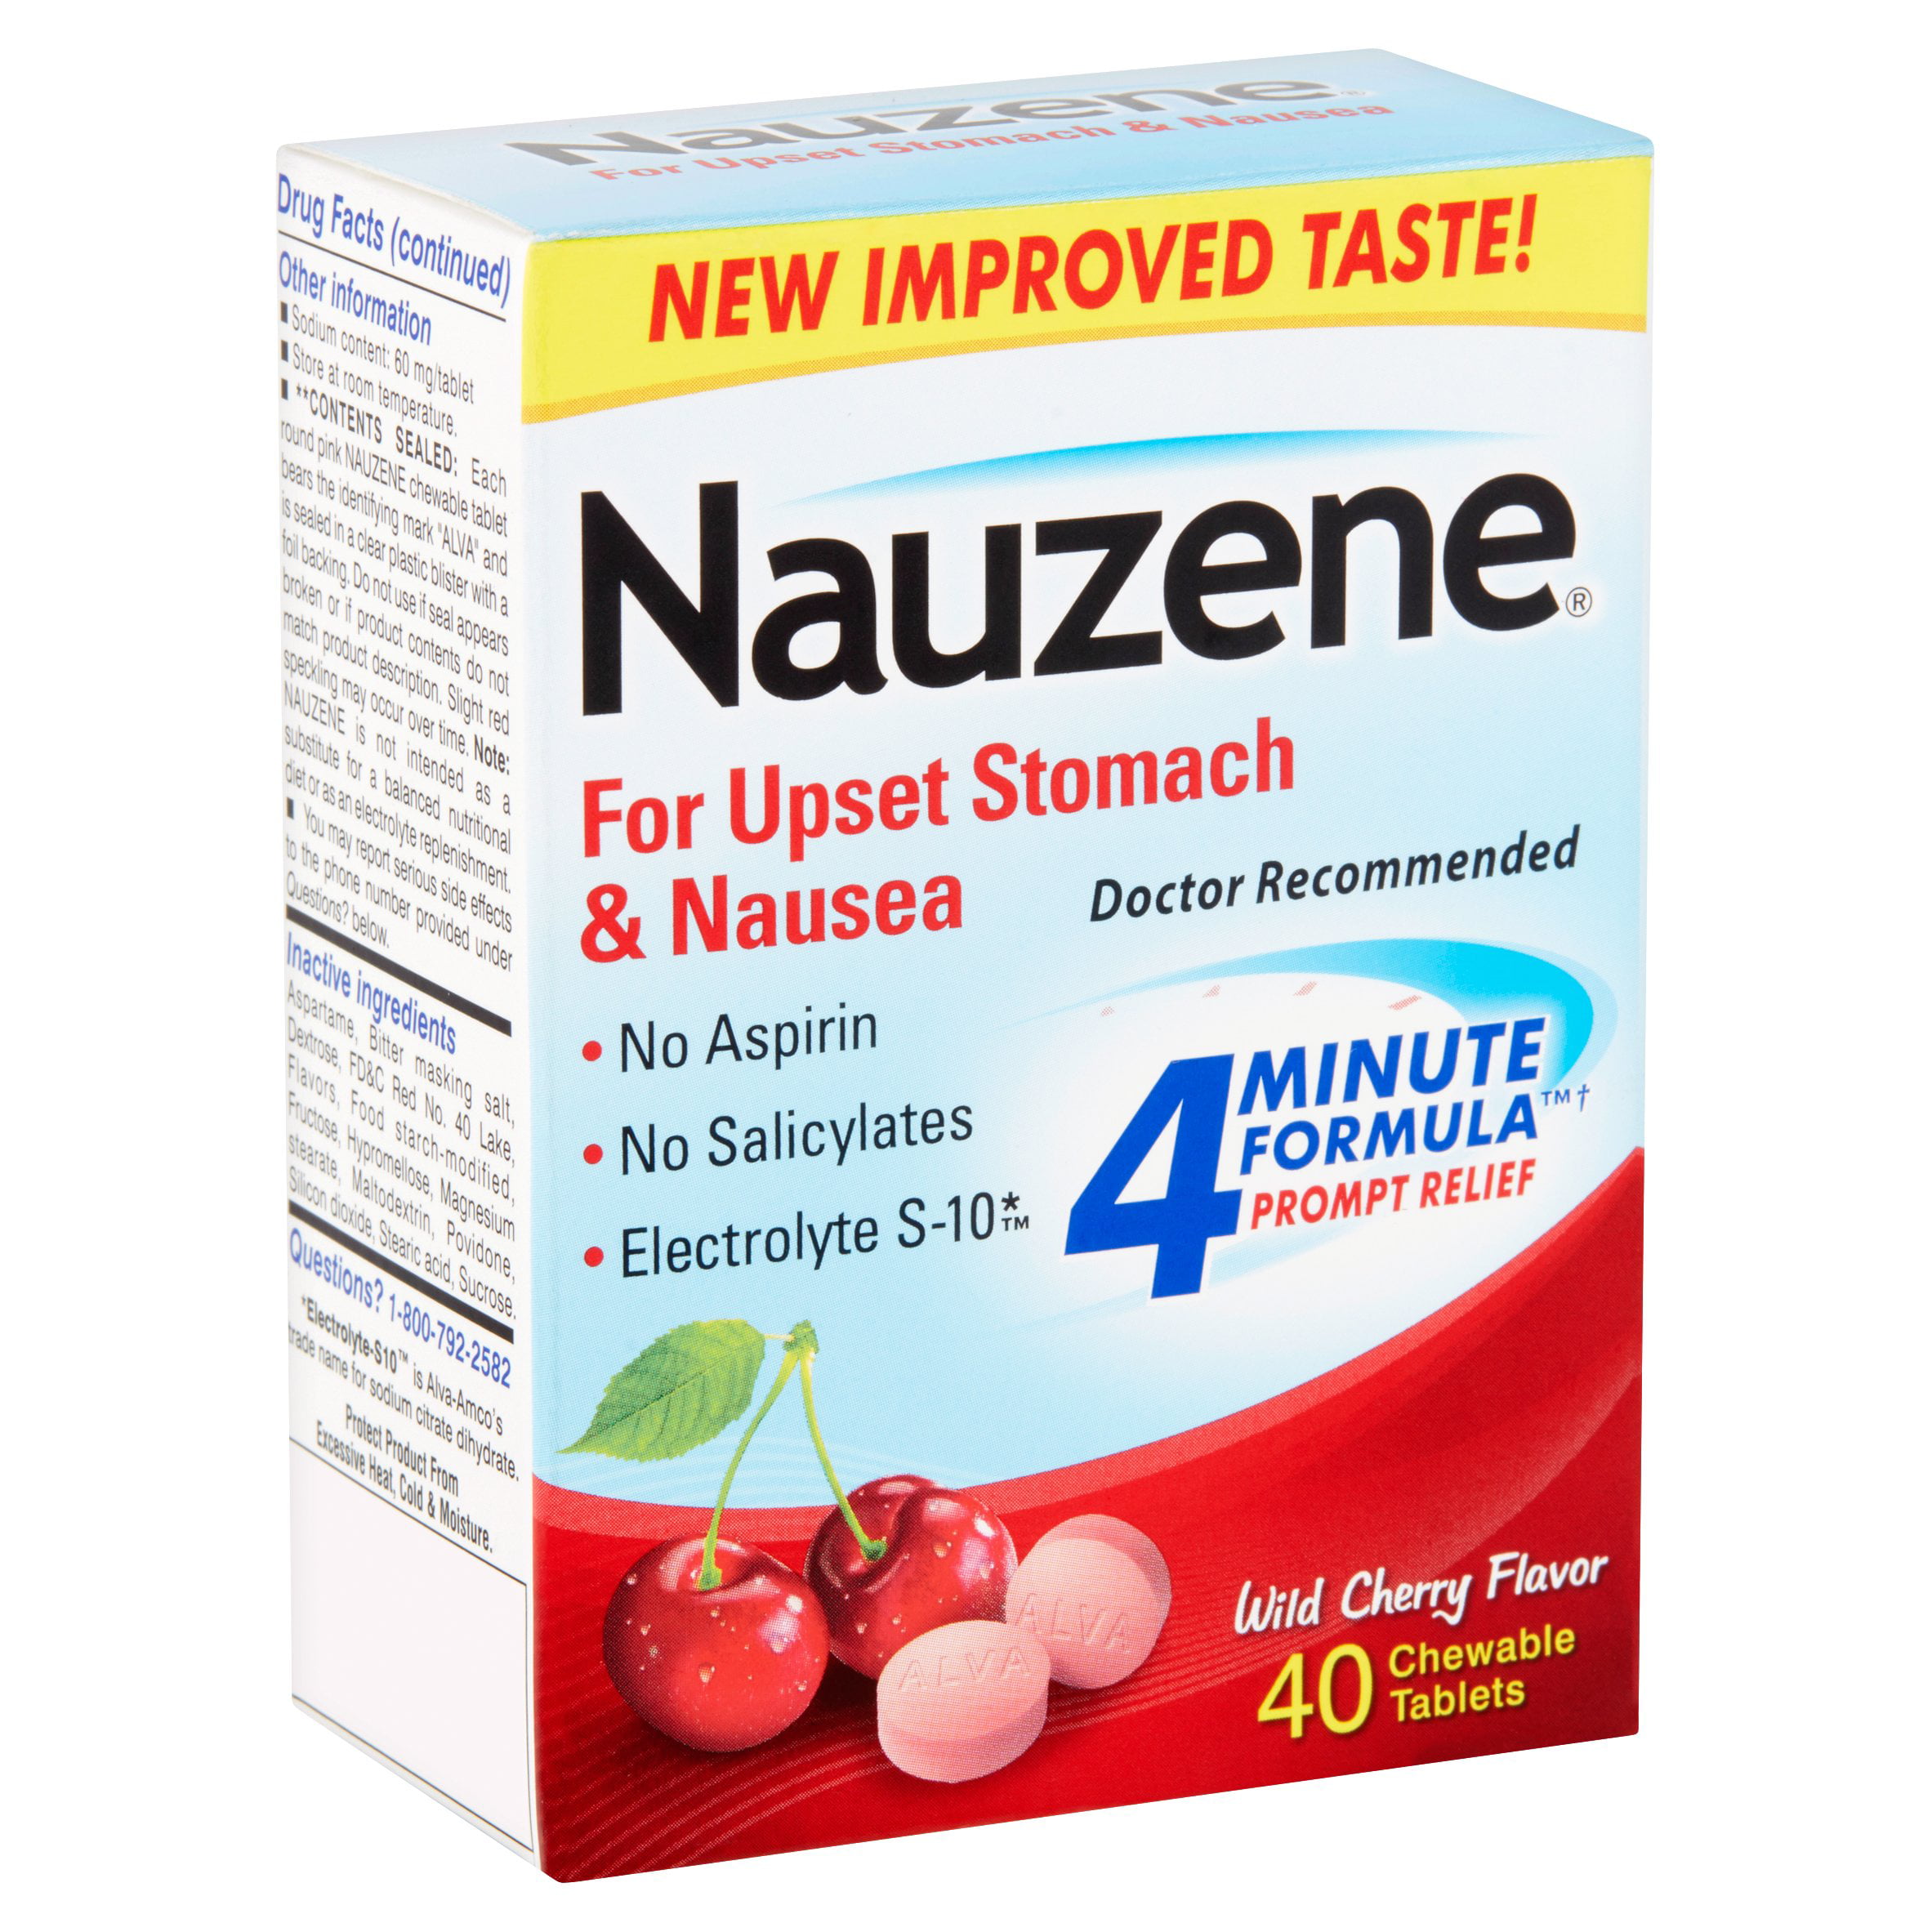 nauzene for upset stomach & nausea wild cherry flavor chewable